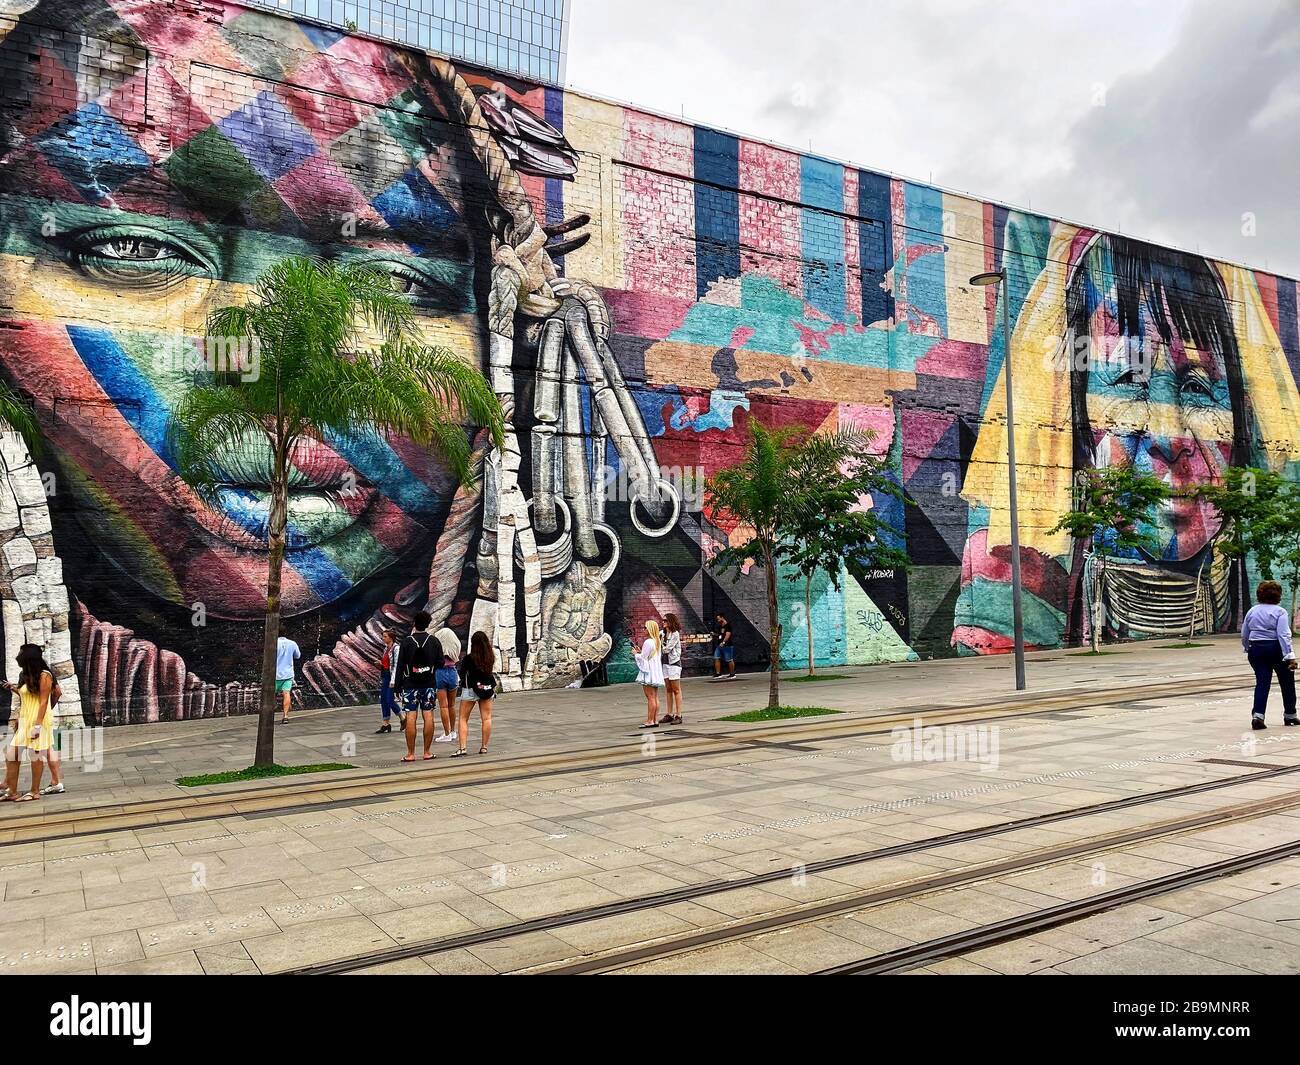 Enorme mural, más grande del mundo, 560 pies, 2016, artista Eduardo Kobra, graffiti, Etnias etnias, somos uno, representa humanidades ancestros comunes, yo Foto de stock